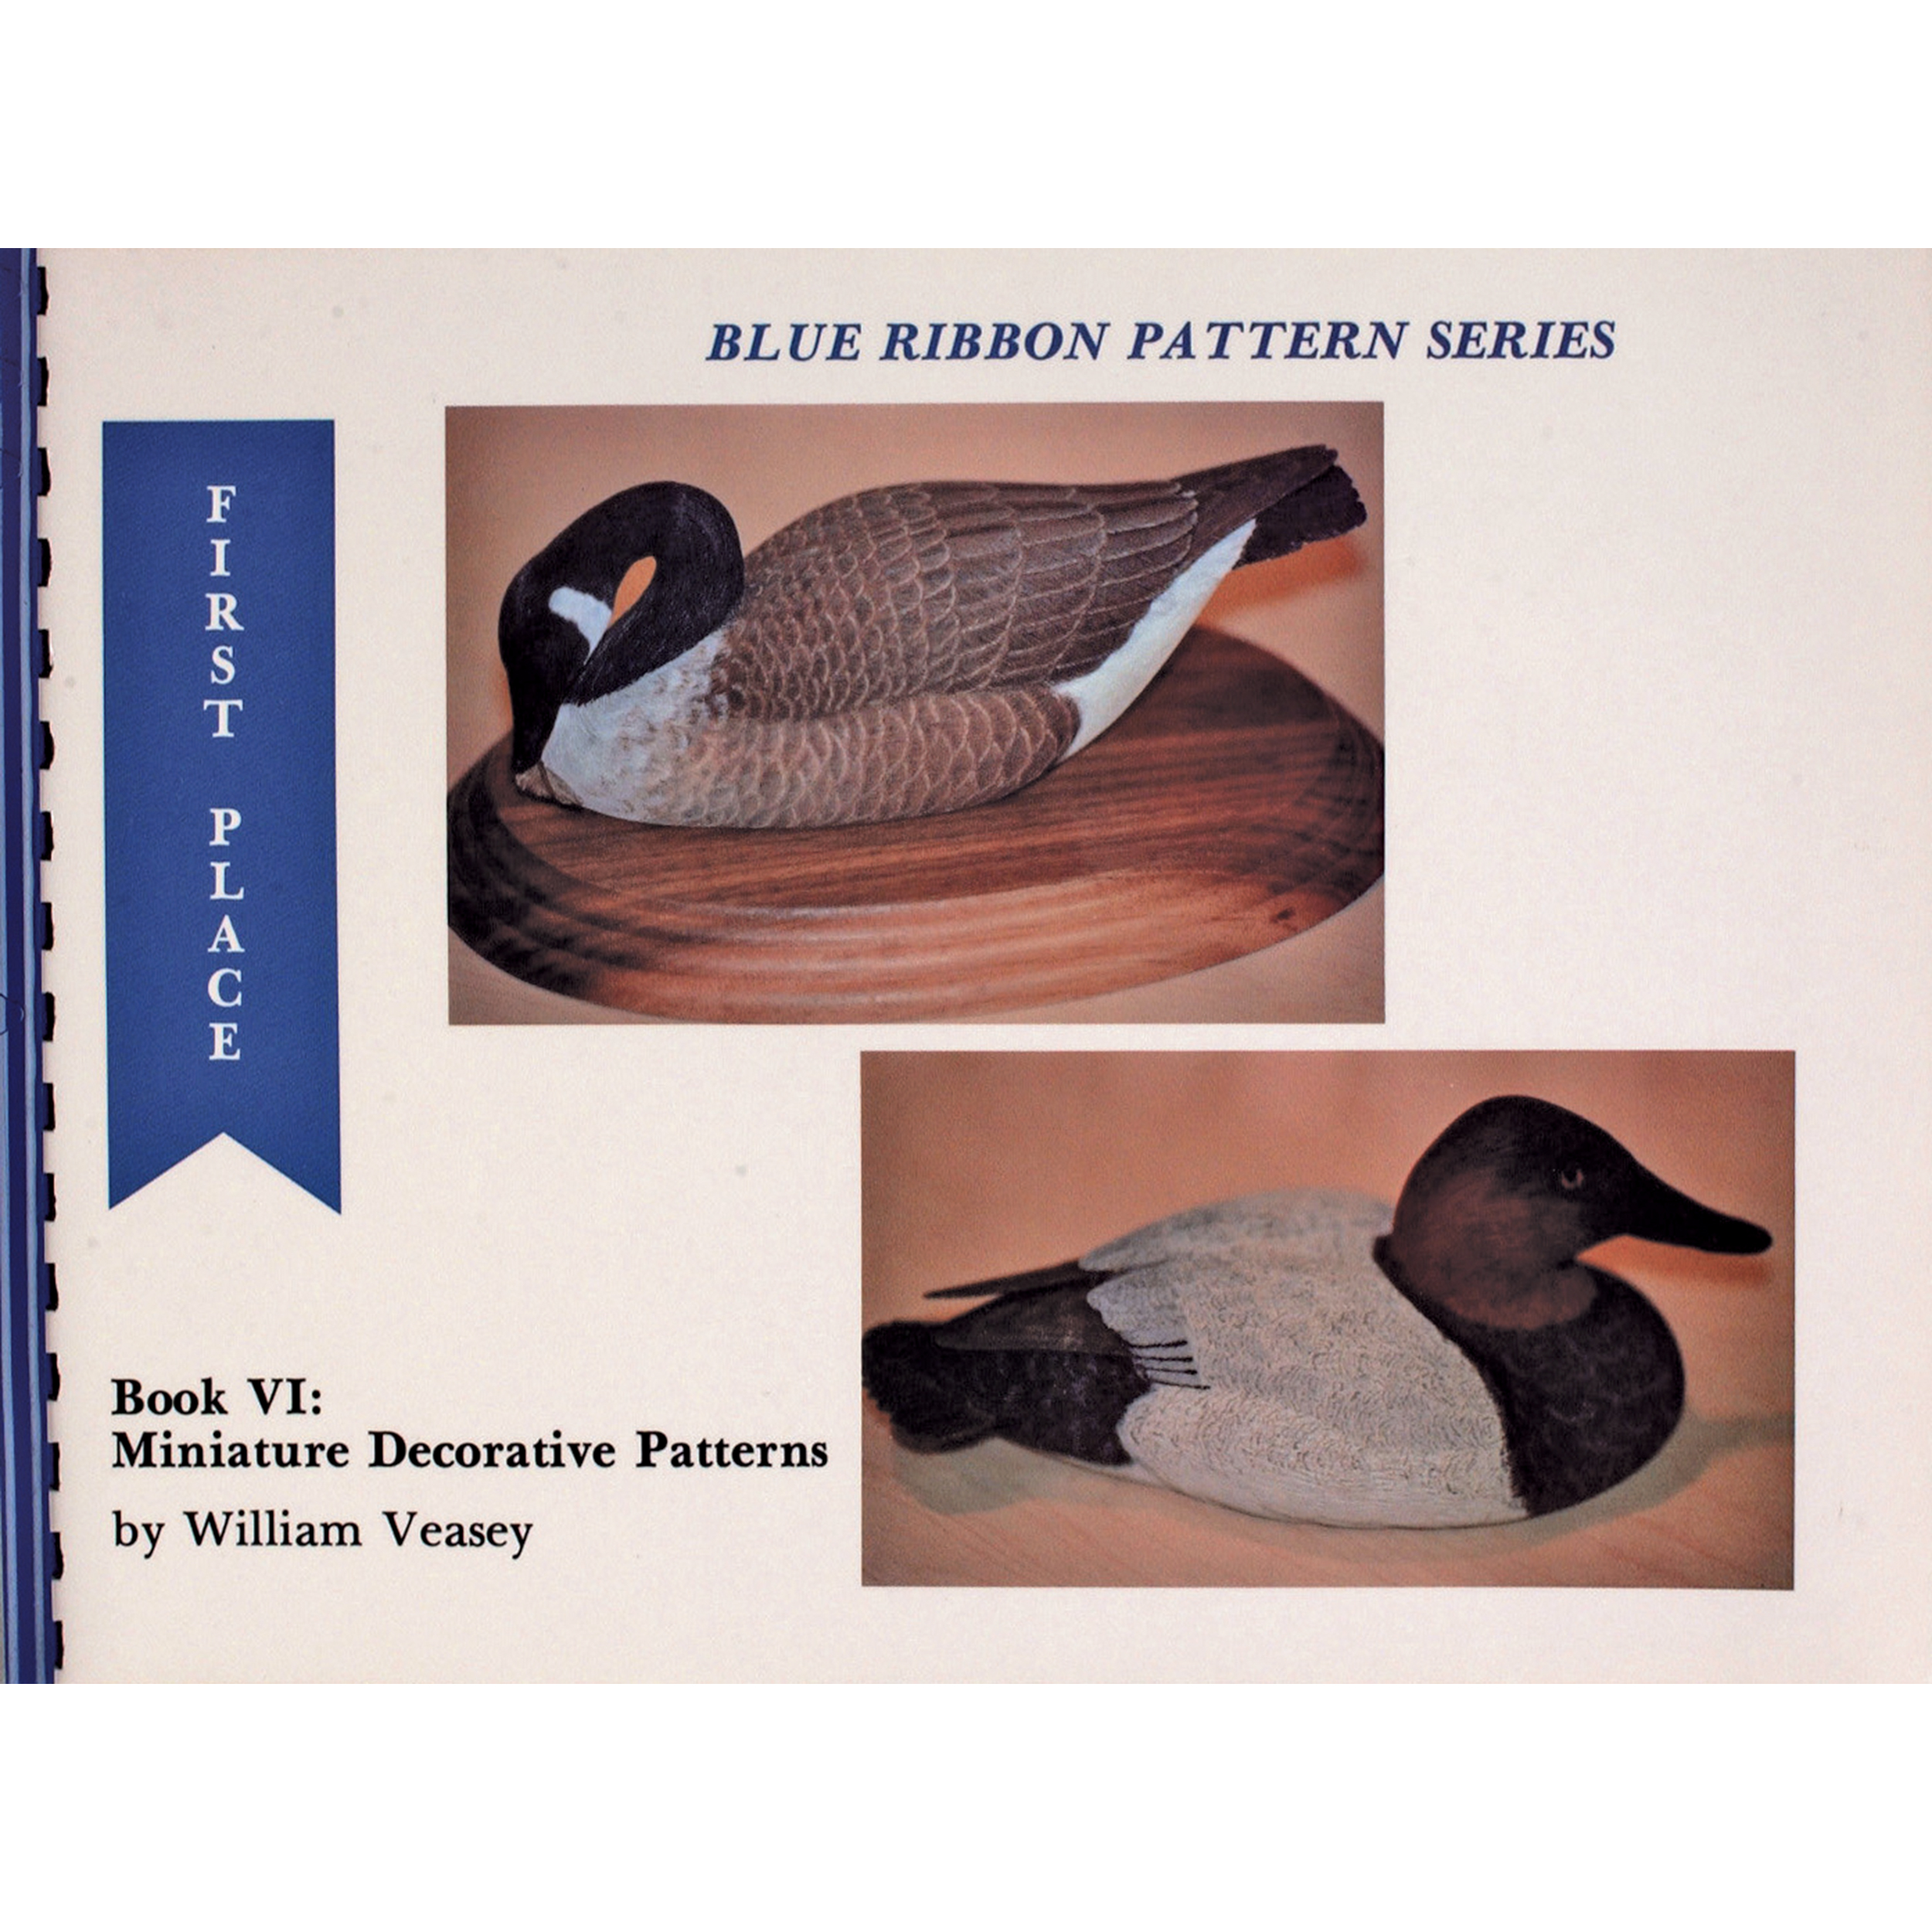 Blue Ribbon Pattern Series: Miniature Decorative Patterns